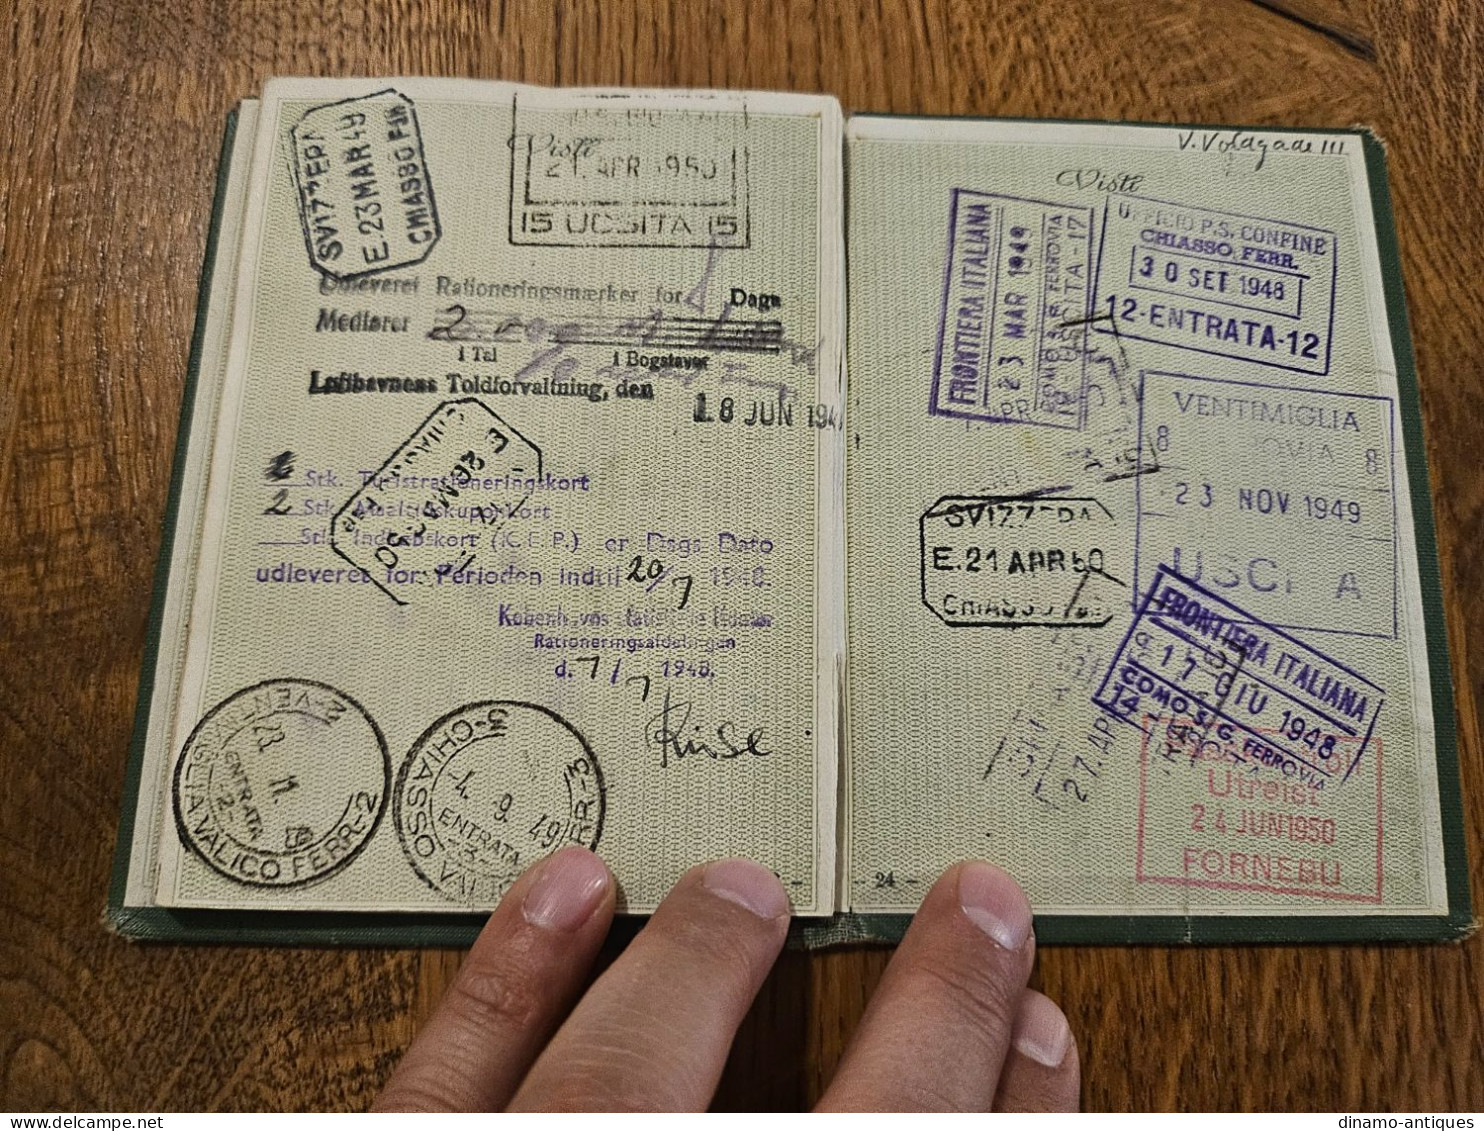 1948 Italy passport passeport issued in Genova for travel to Switzerland Norway Denmark Sweden revenues fiscal